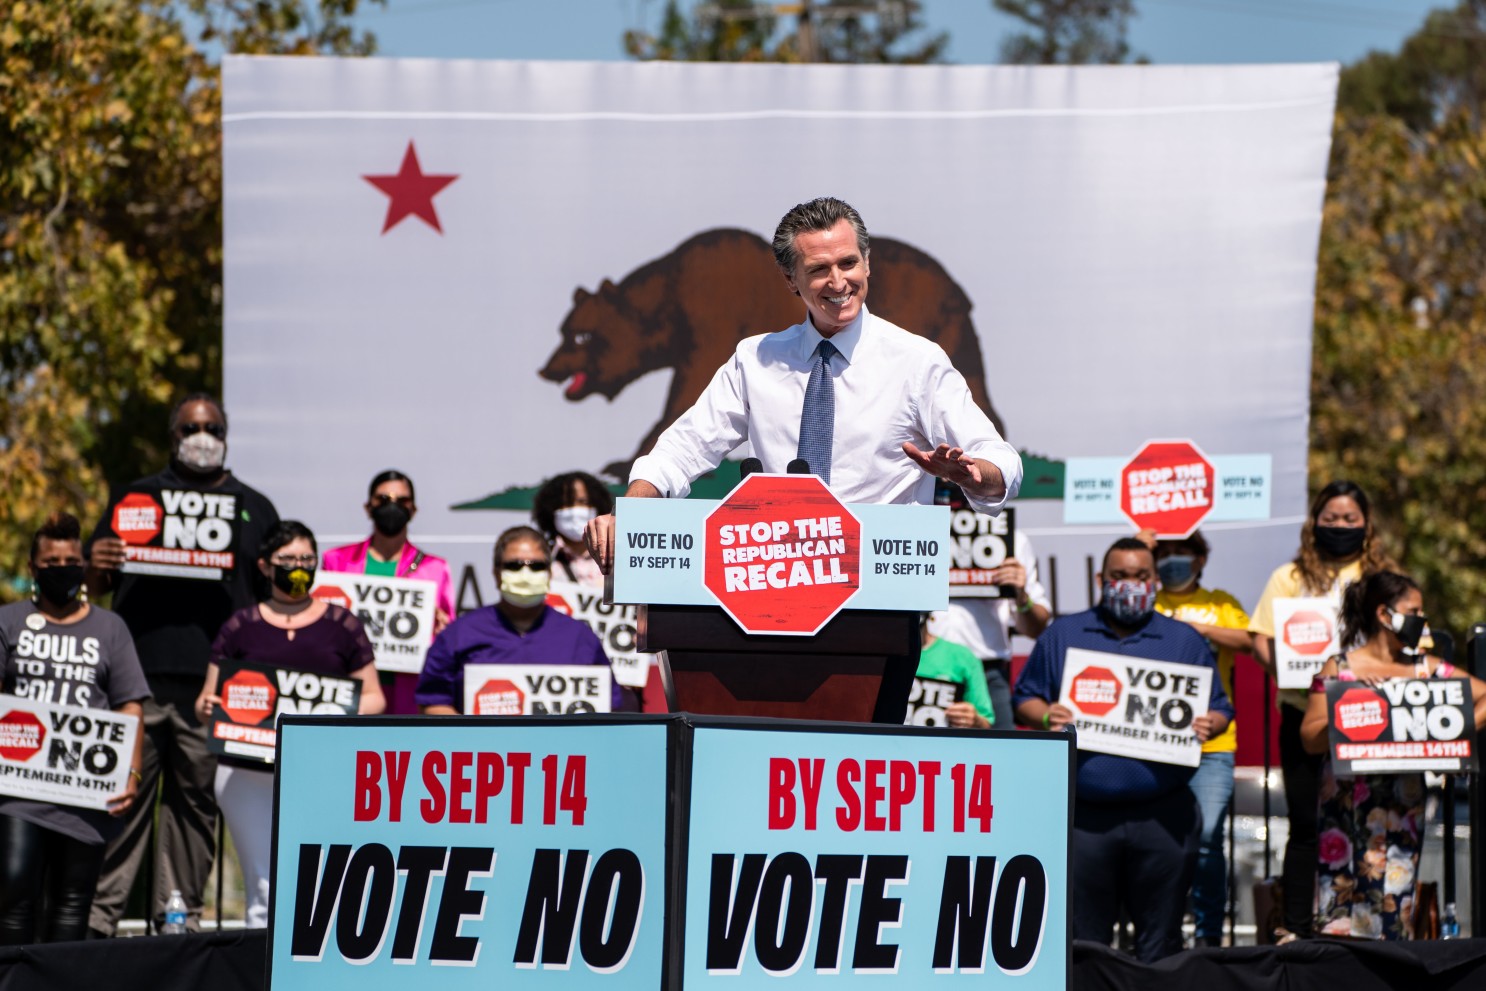 9/14 – Vote No on Recalling CA Governor Gavin Newsom